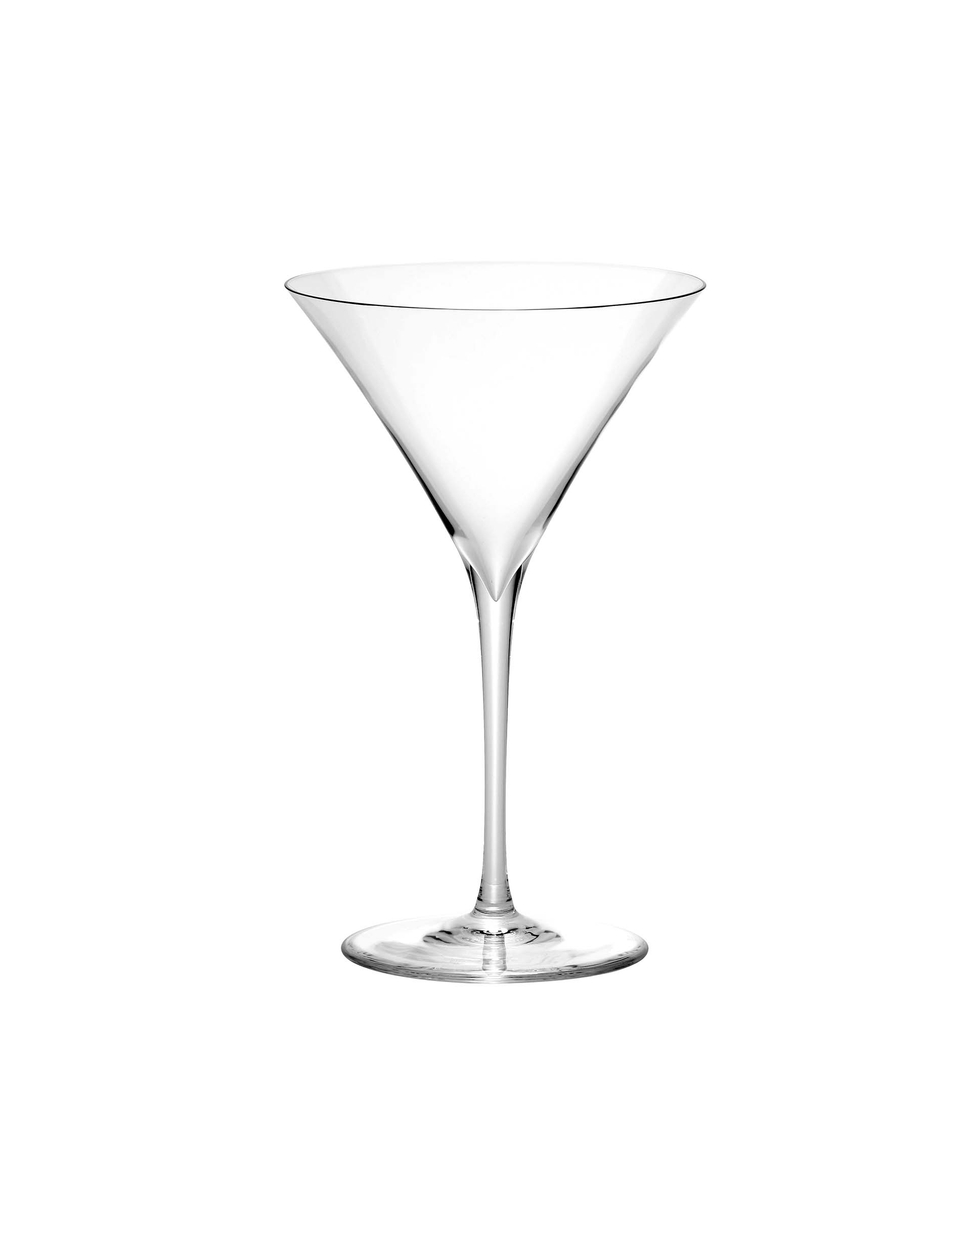 Oeno martini glass, 290 ml